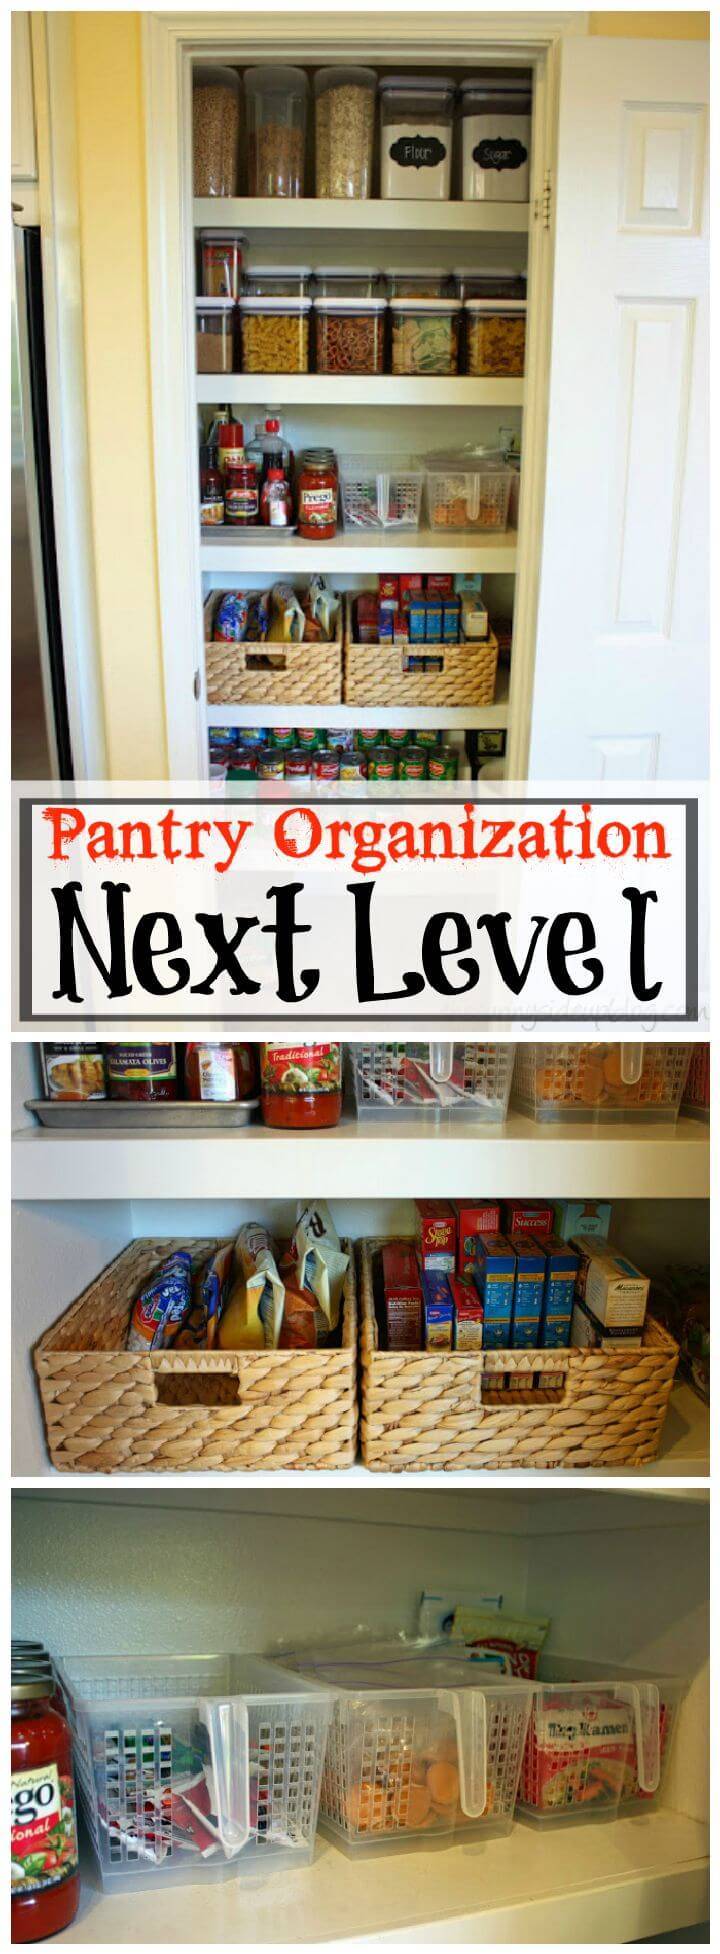 Pantry Organization Next Level